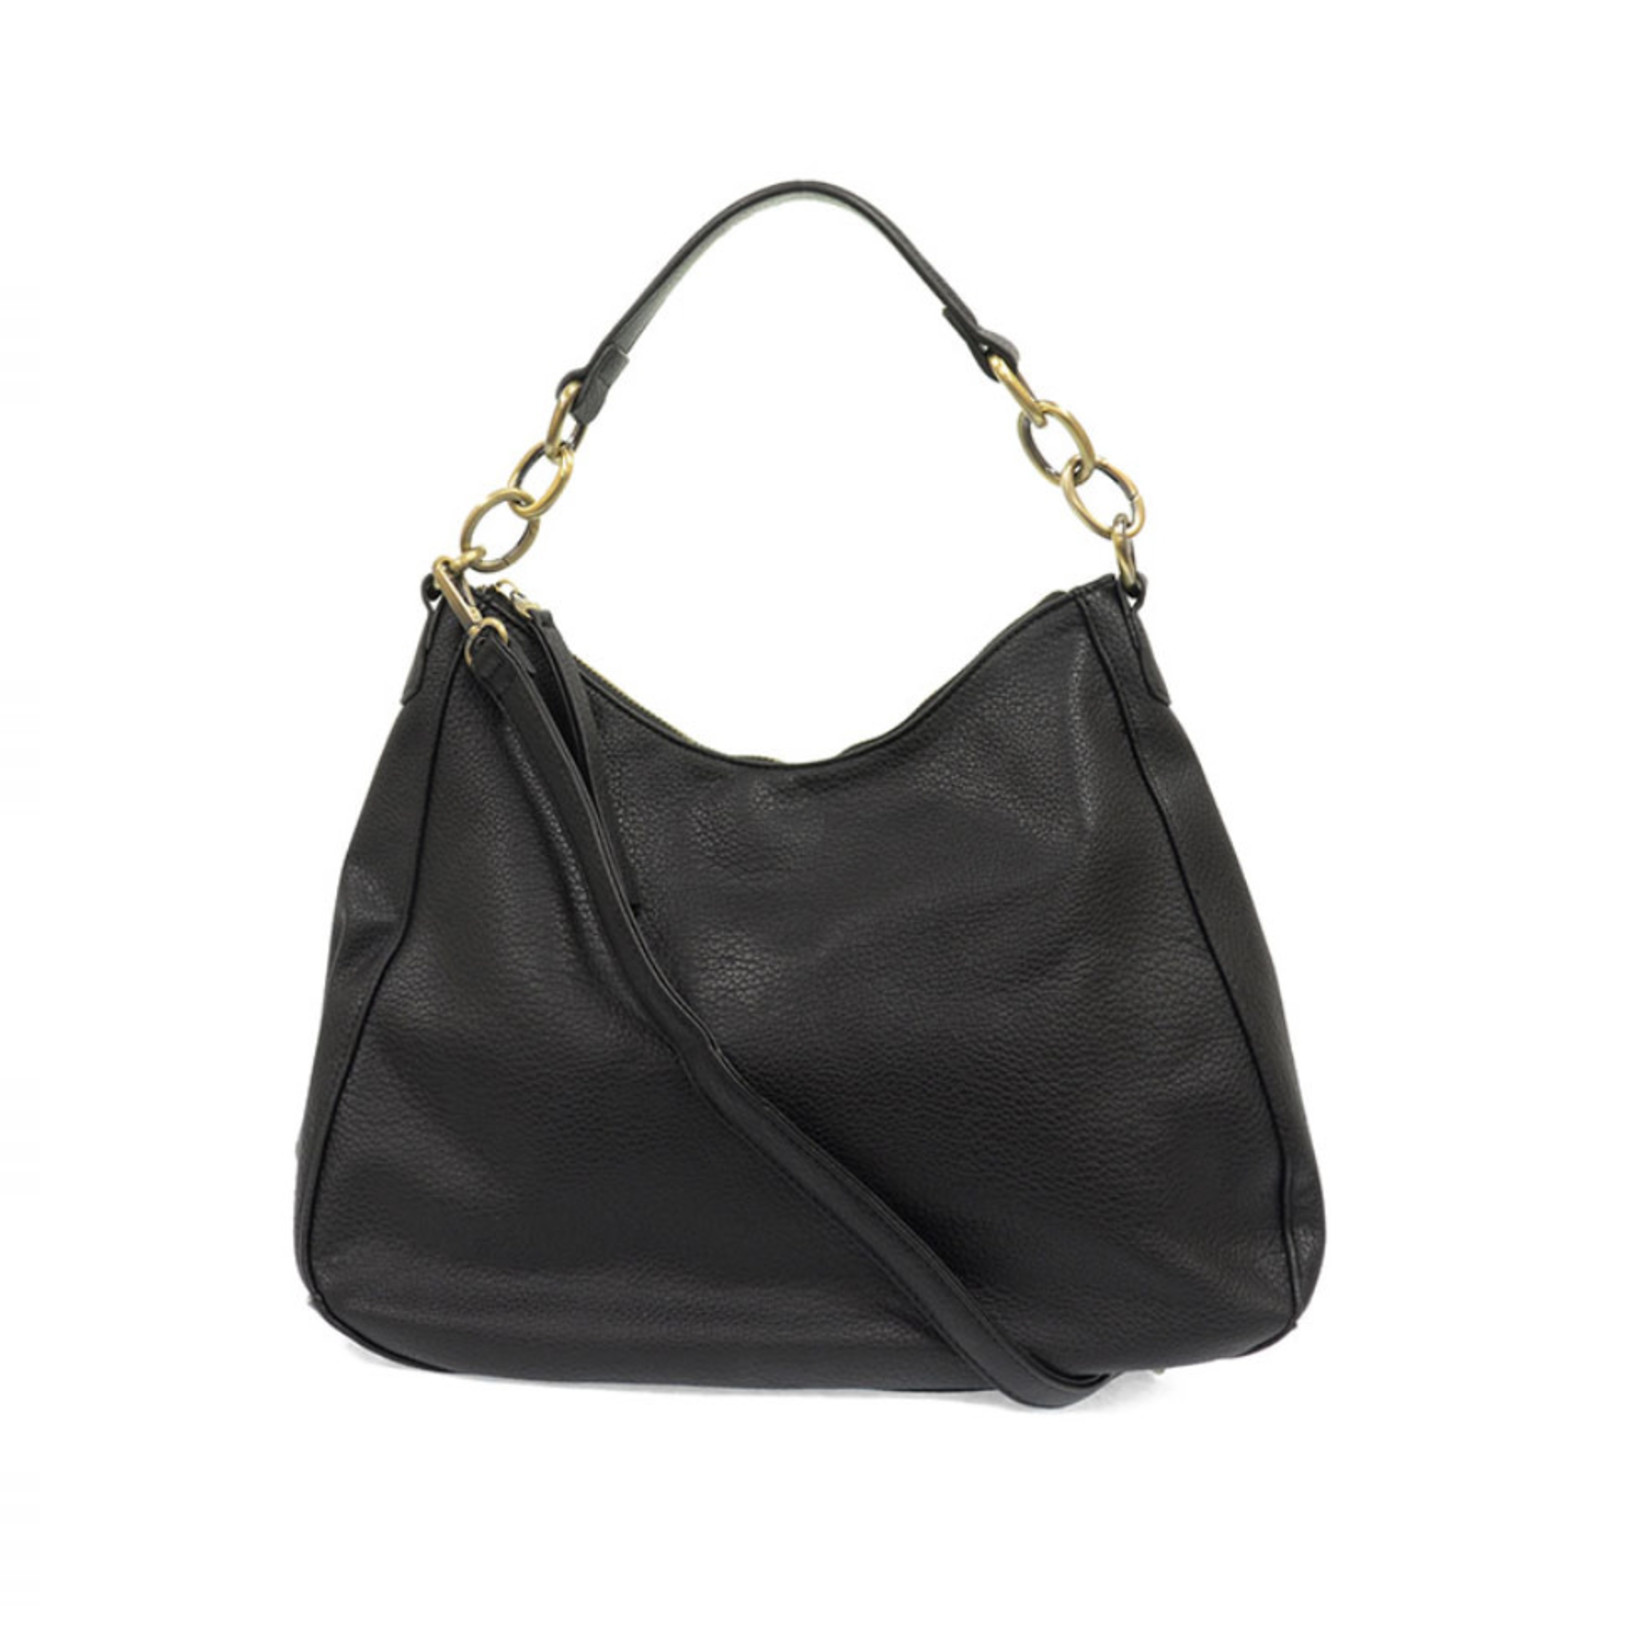 Joy Susan Shanae Chain Handle Convertible Handbag